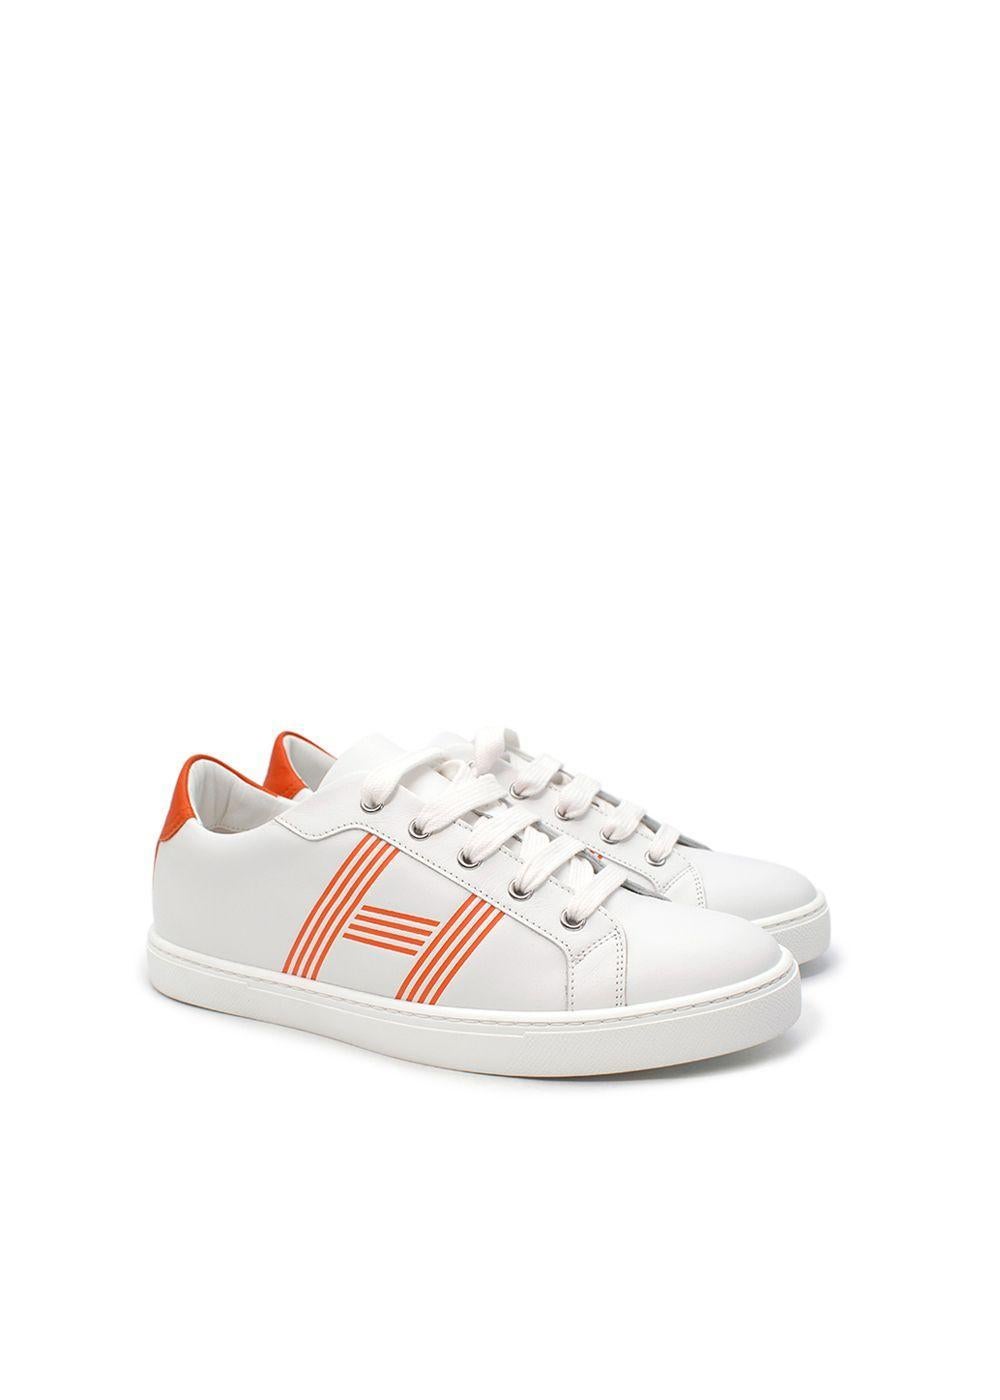 Hermes White/Orange Leather Avantage Sneakers

- Contrasting 